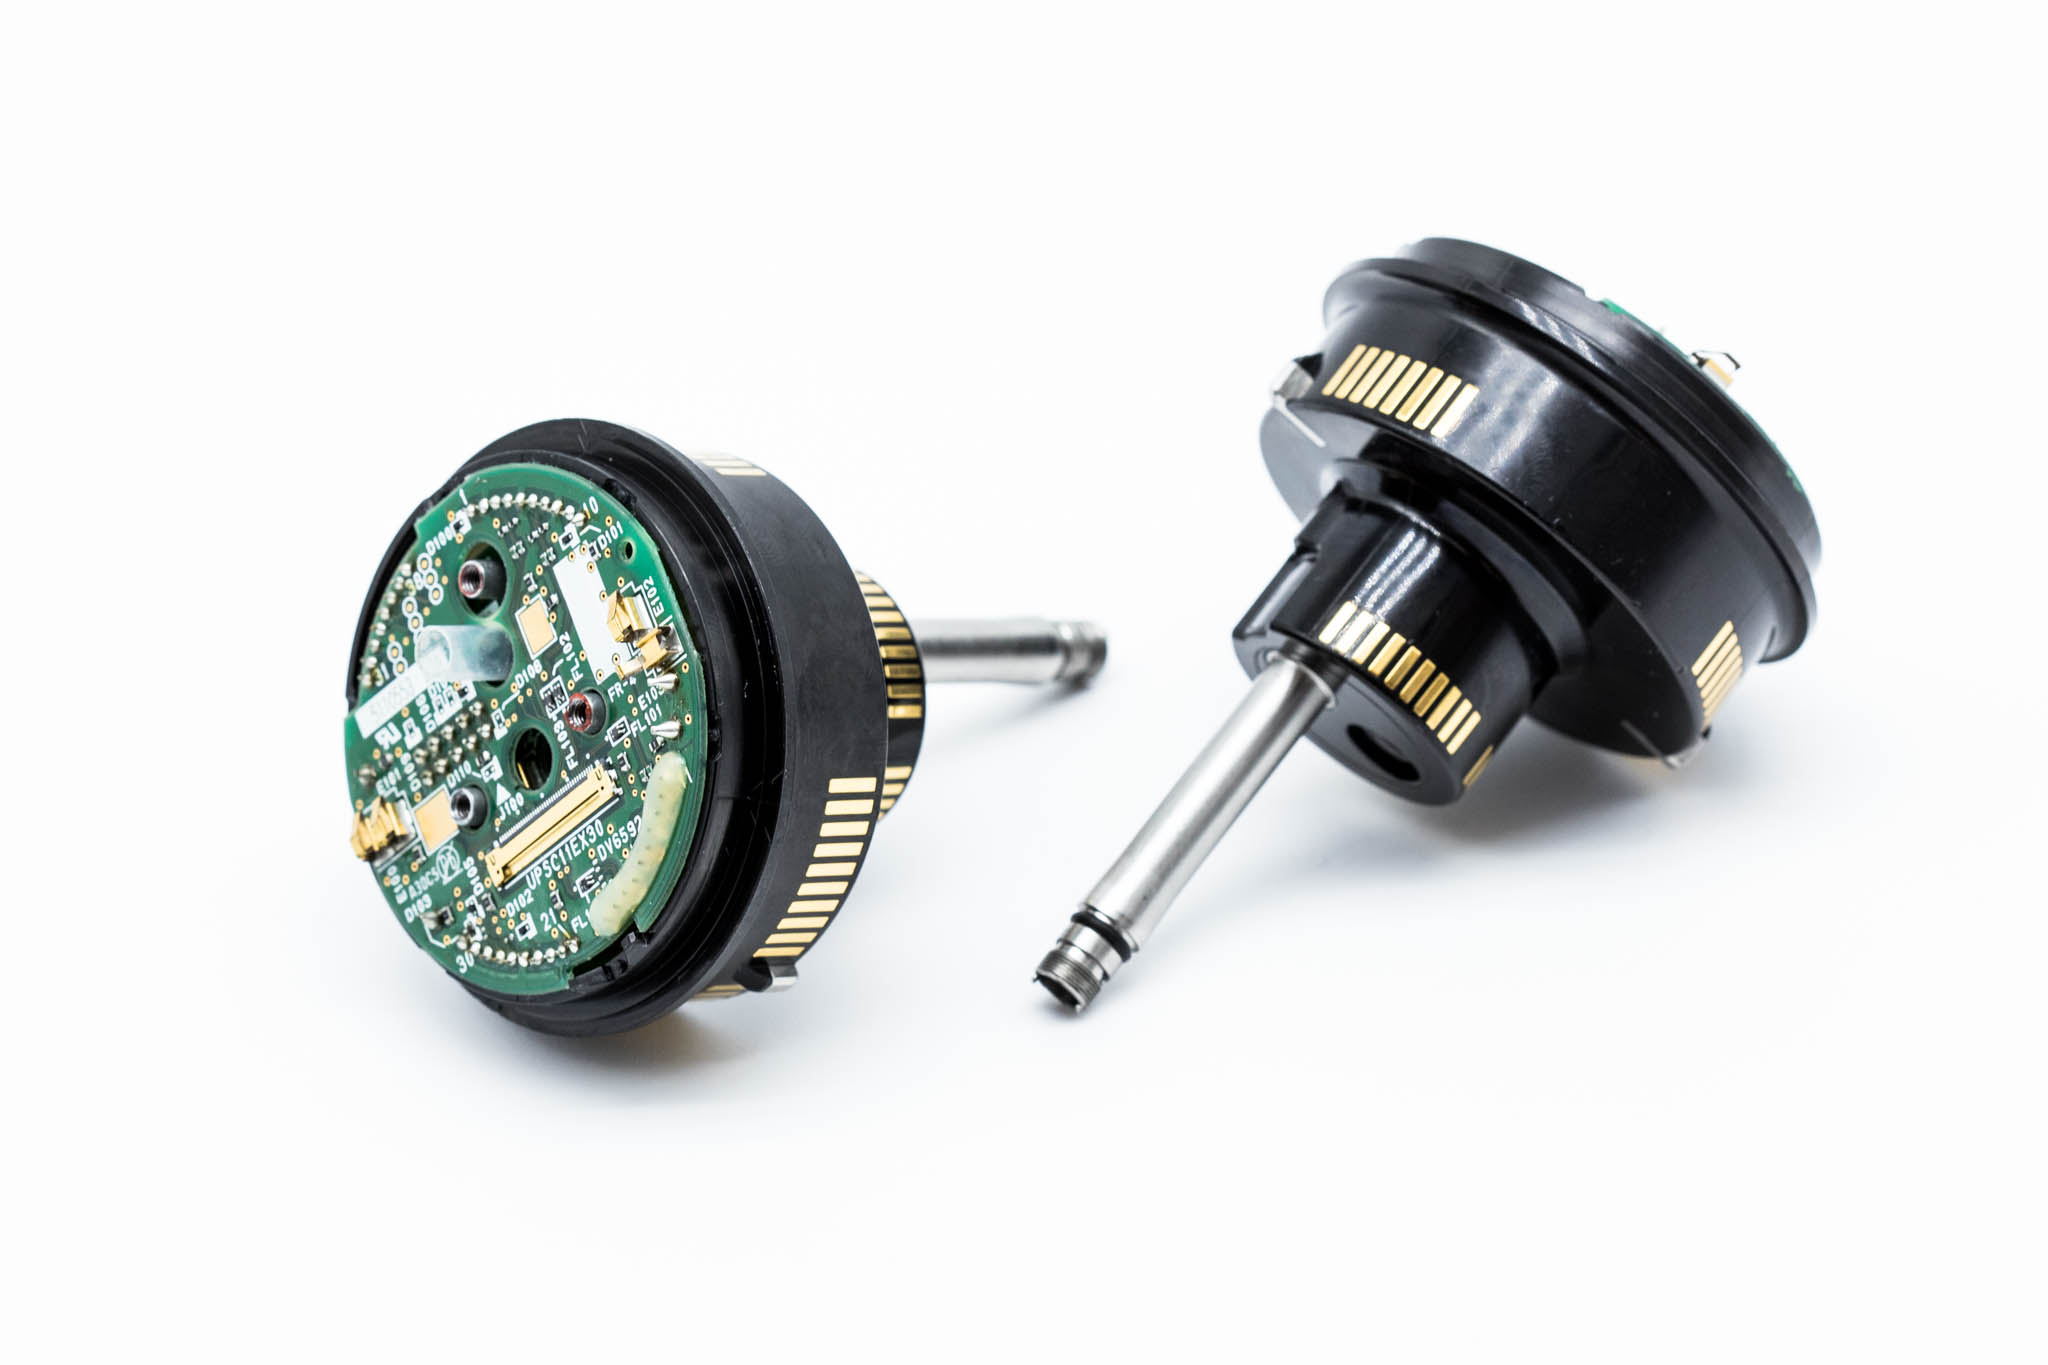 OEM Electrical Connector Plug Unit (Standard Type) - GIF-H190, GIF-1TH190, CF-H190L, PCF-H190L, CF-H185L (No Ribbons)